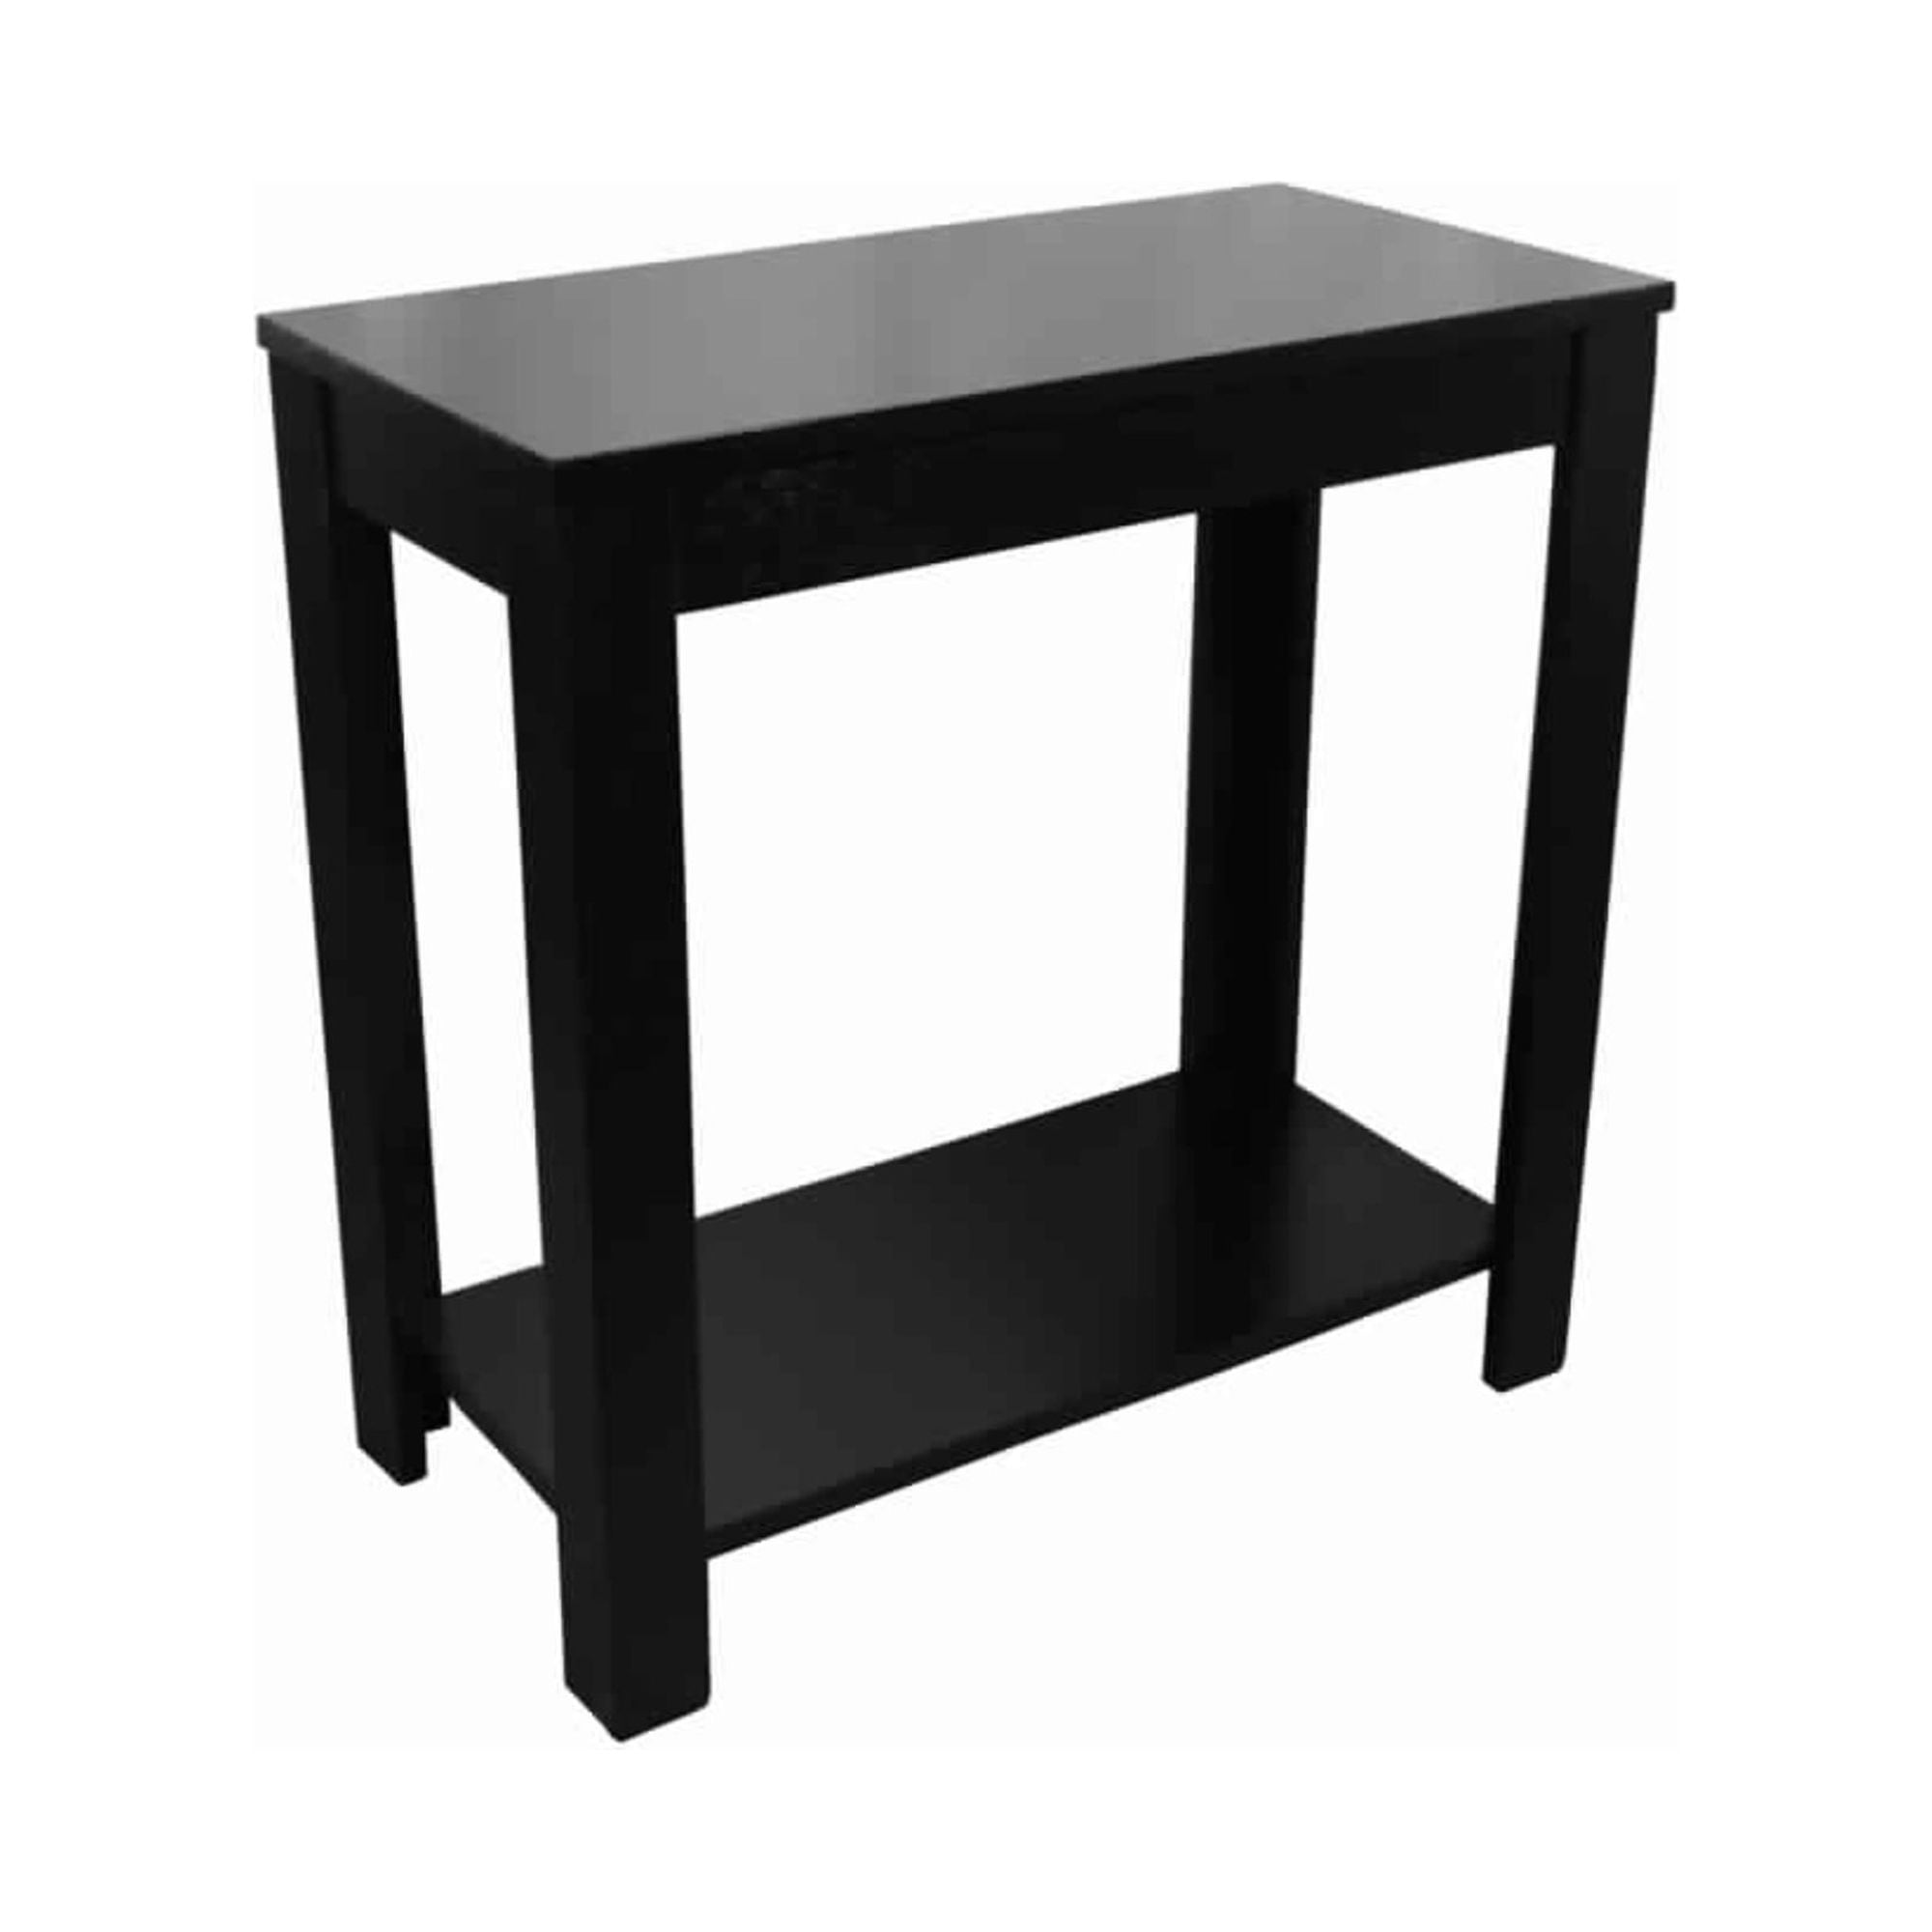 Bm210203 Wooden Chairside Table With Bottom Shelf & Block Legs - Black